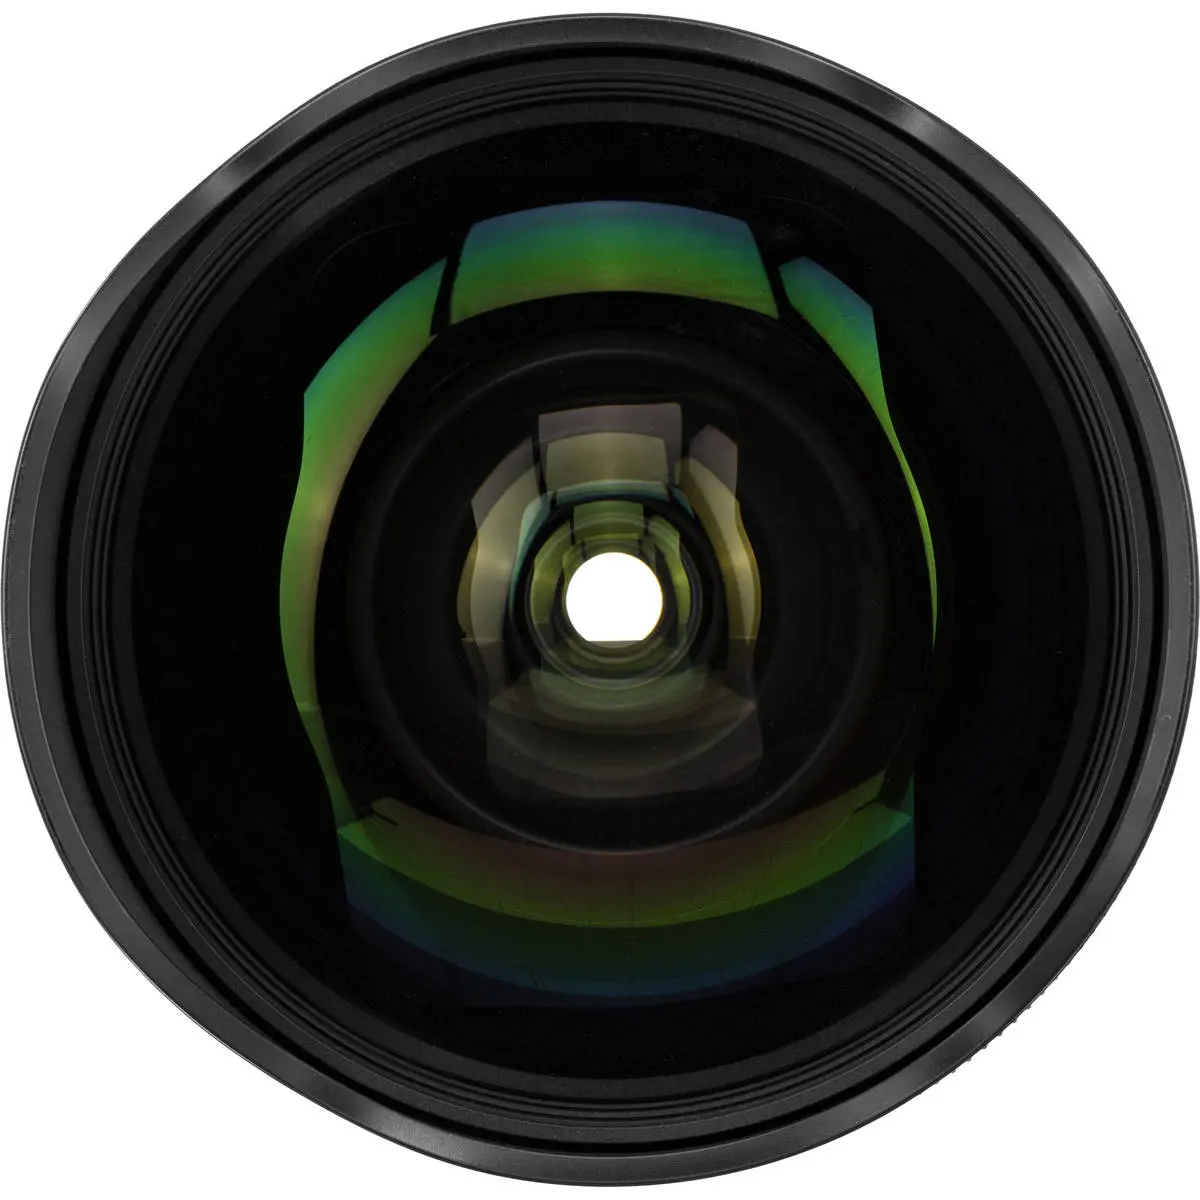 4. Sigma 14mm F1.8 DG HSM | Art (Canon) Lens